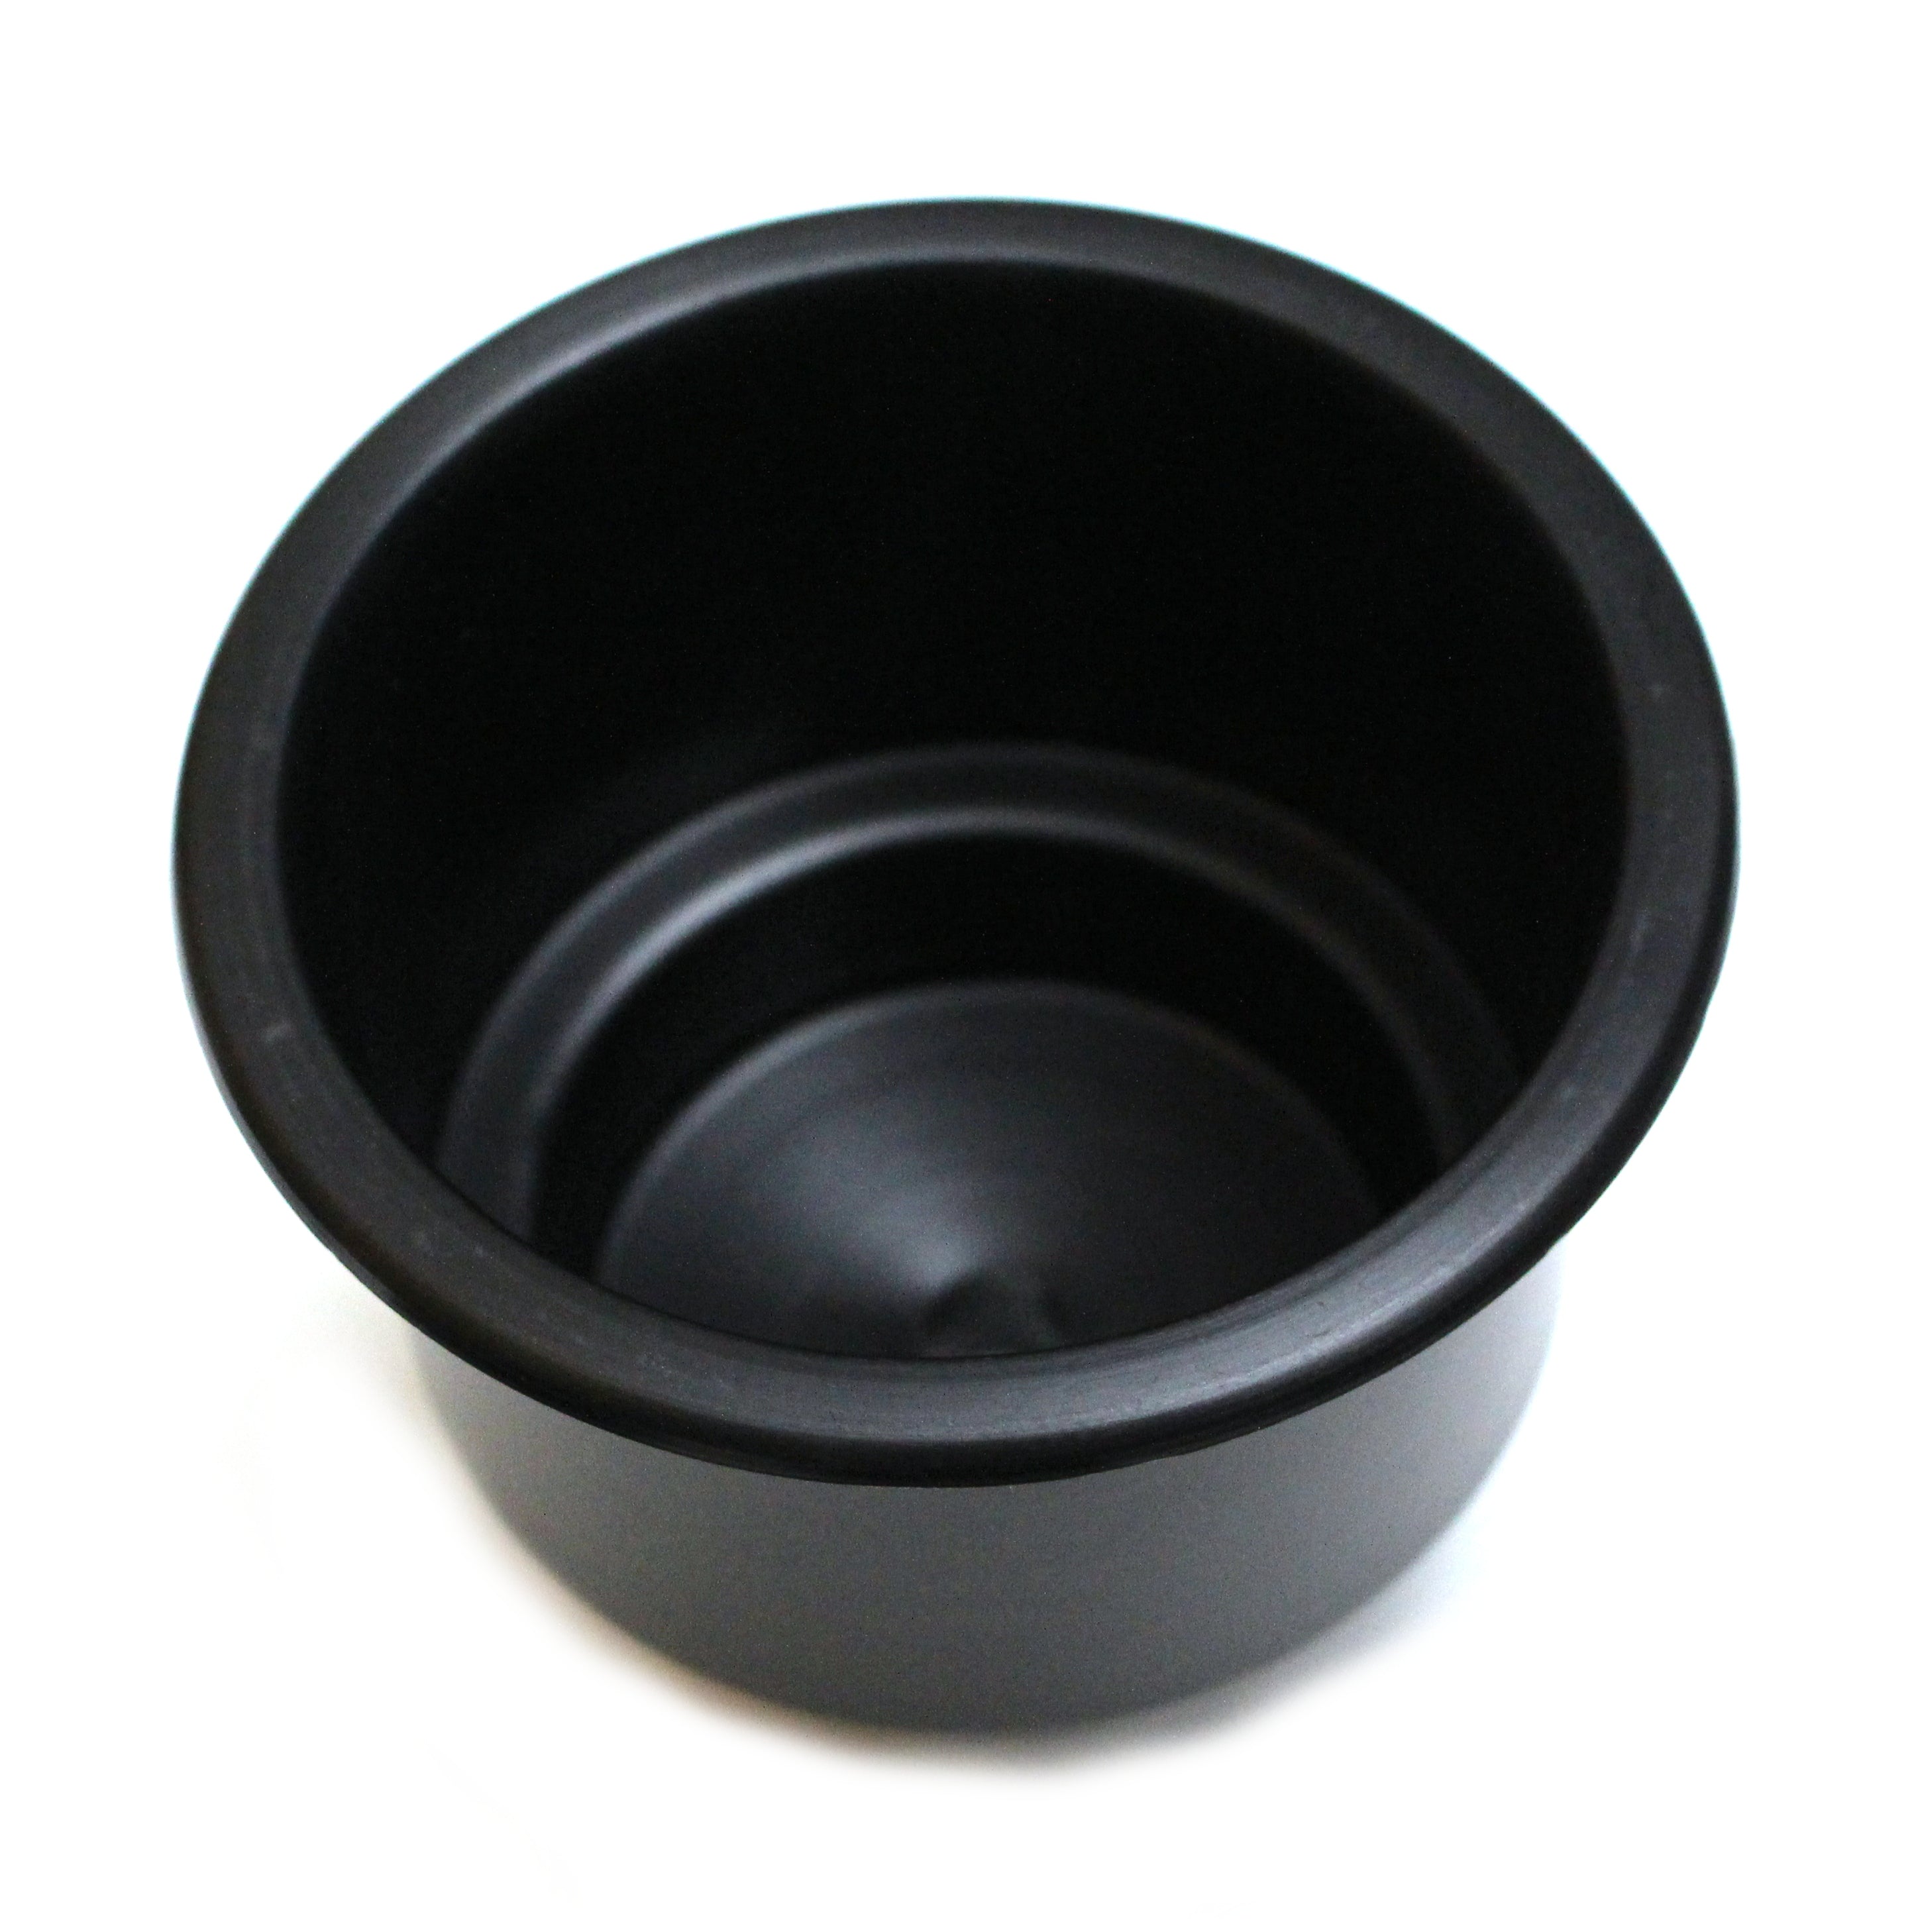 Universal 3-5/8 Black Plastic Jumbo Cup Holder with Drain Hole